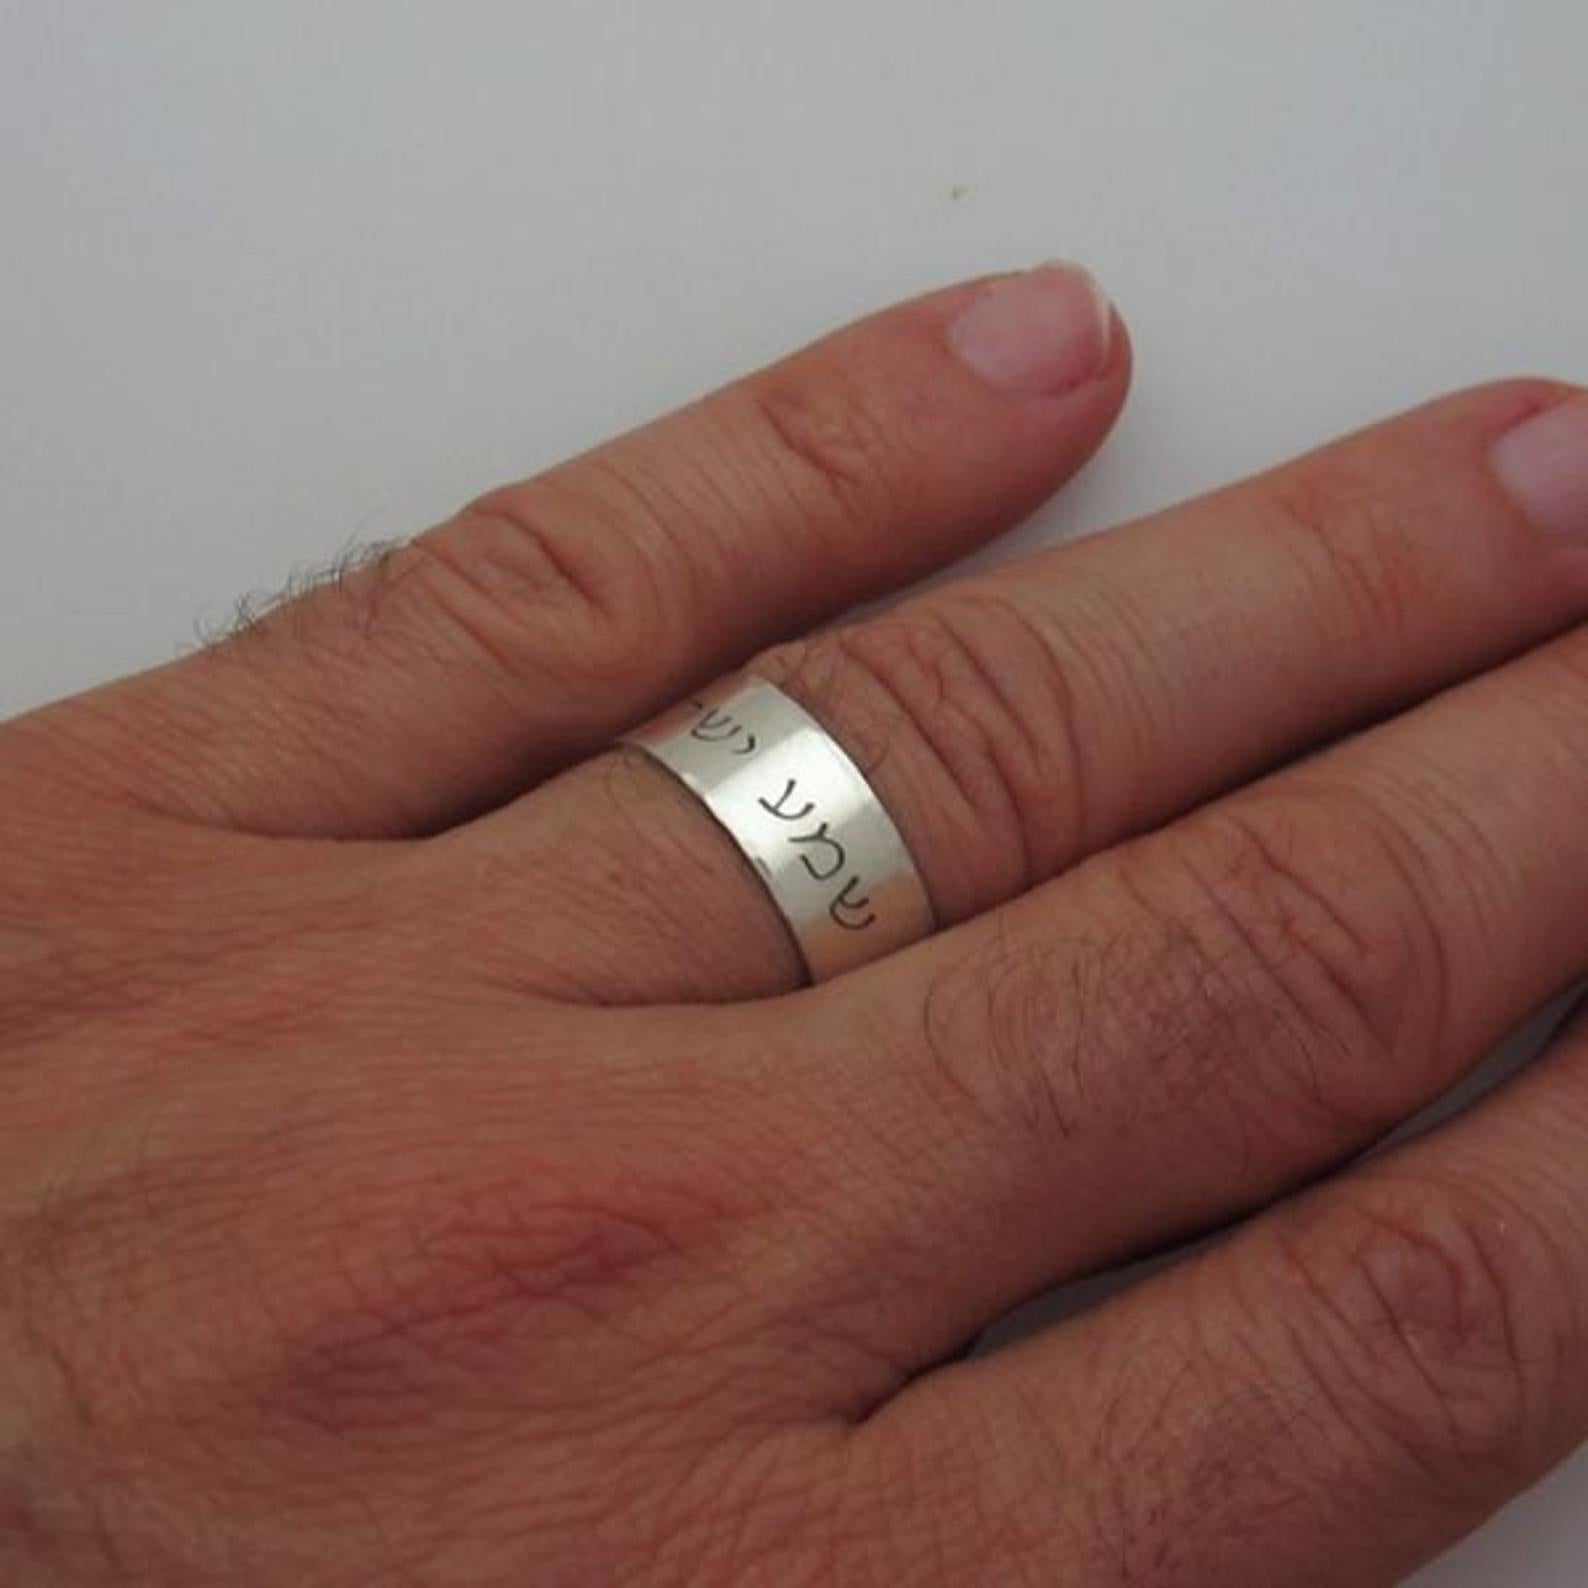 Do Jewish people wear wedding rings? - Quora